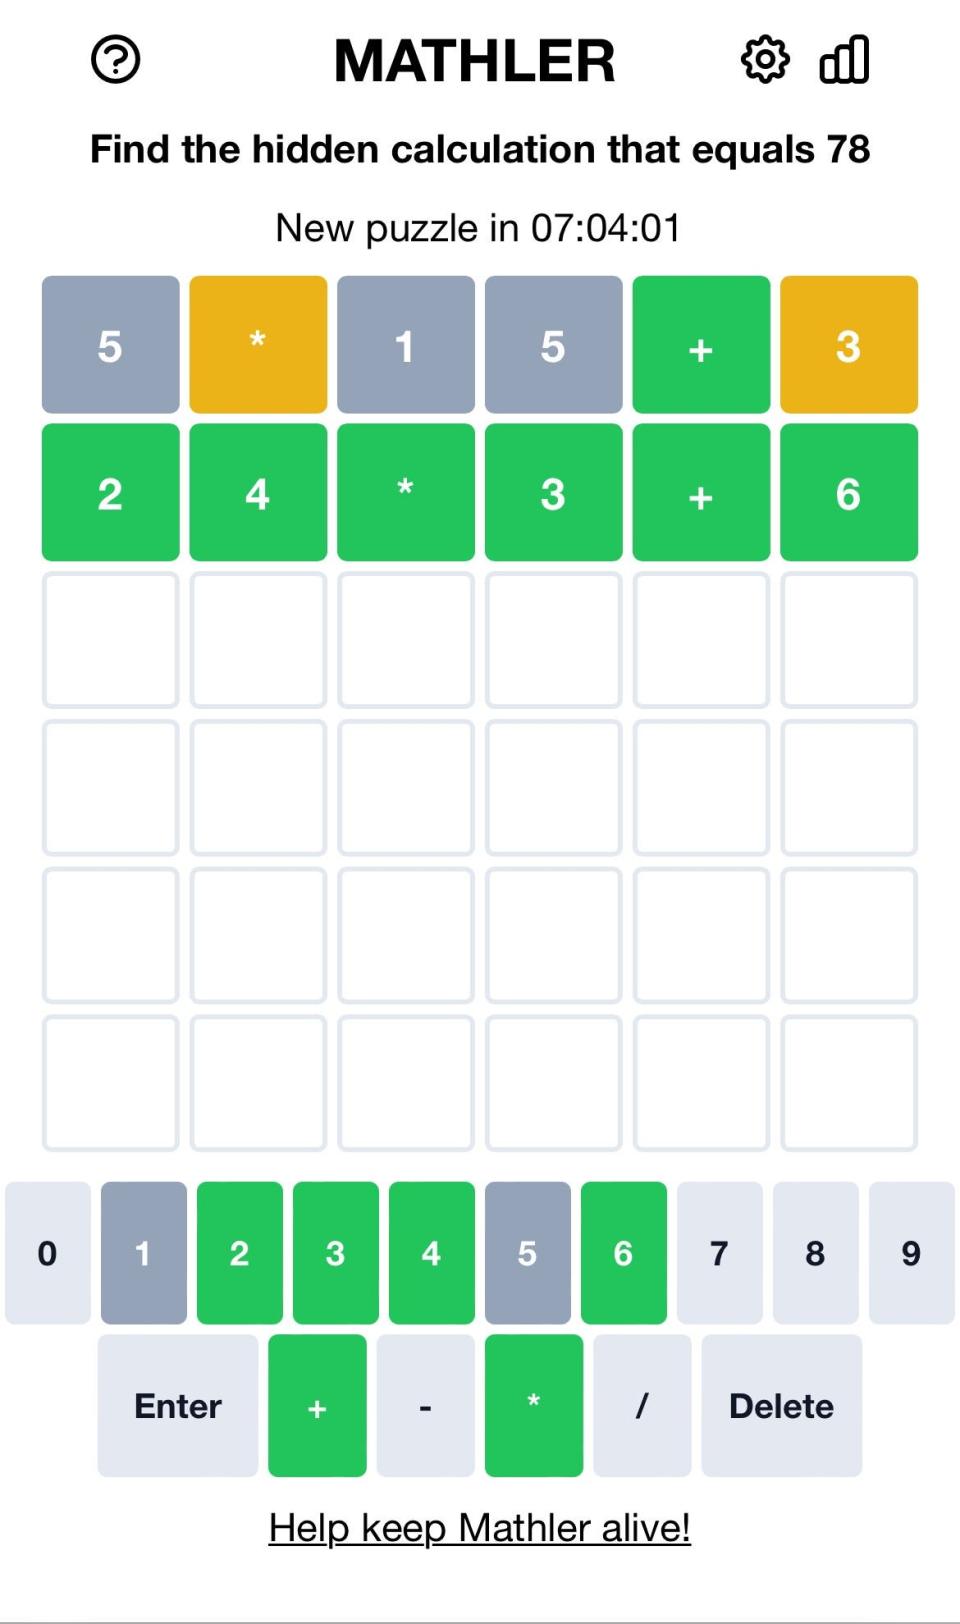 A screenshot of the online math puzzle game Mathler.